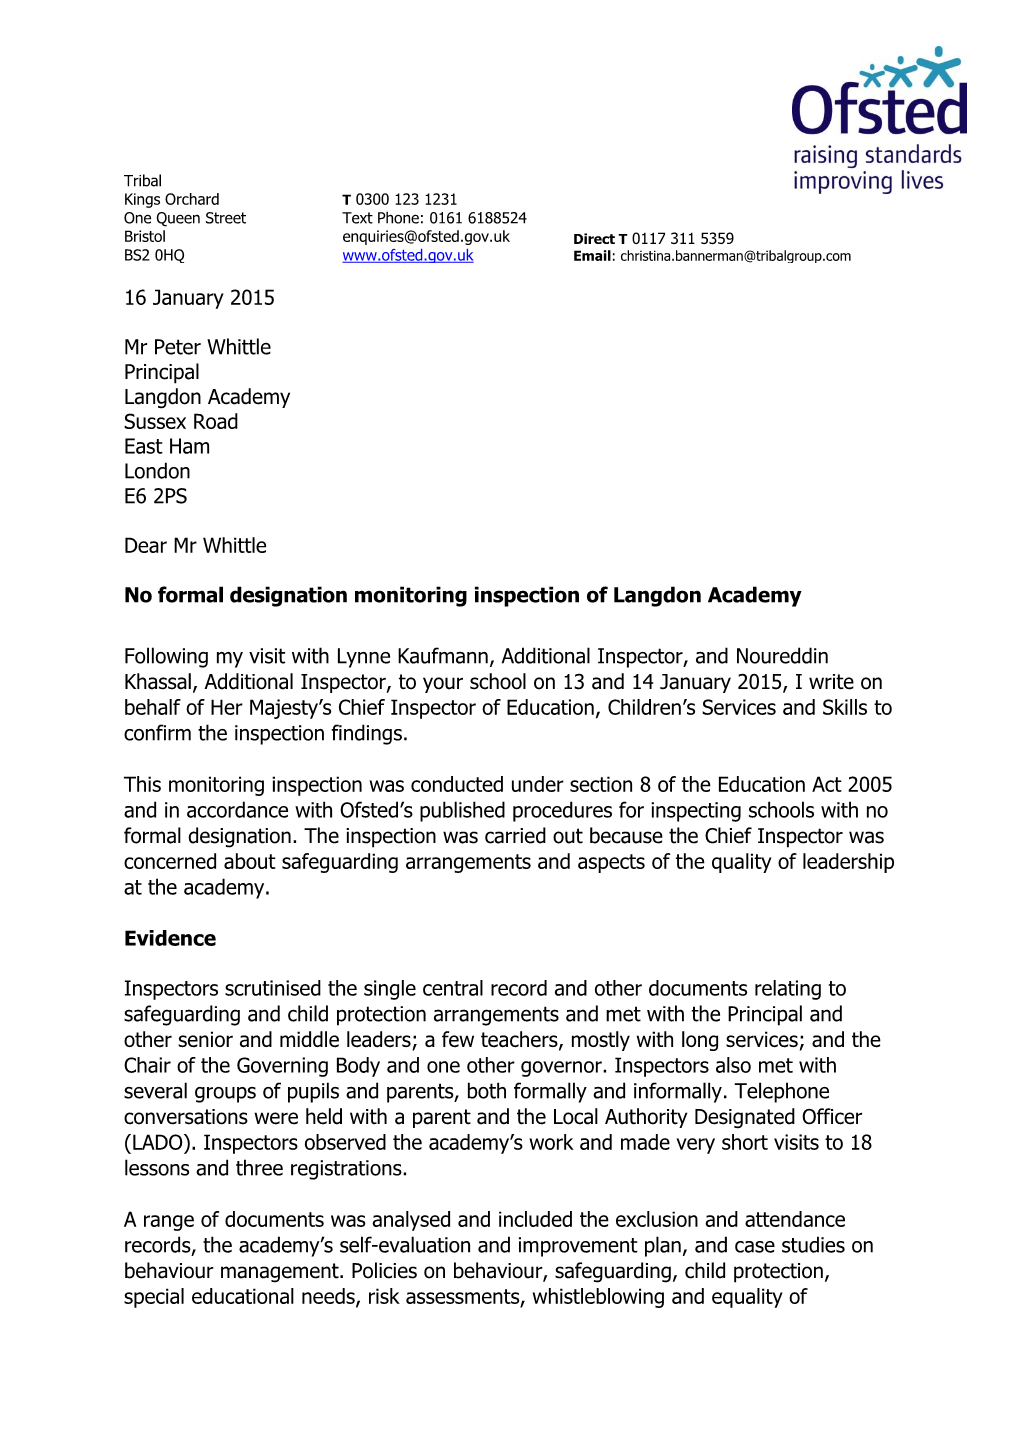 16 January 2015 Mr Peter Whittle Principal Langdon Academy